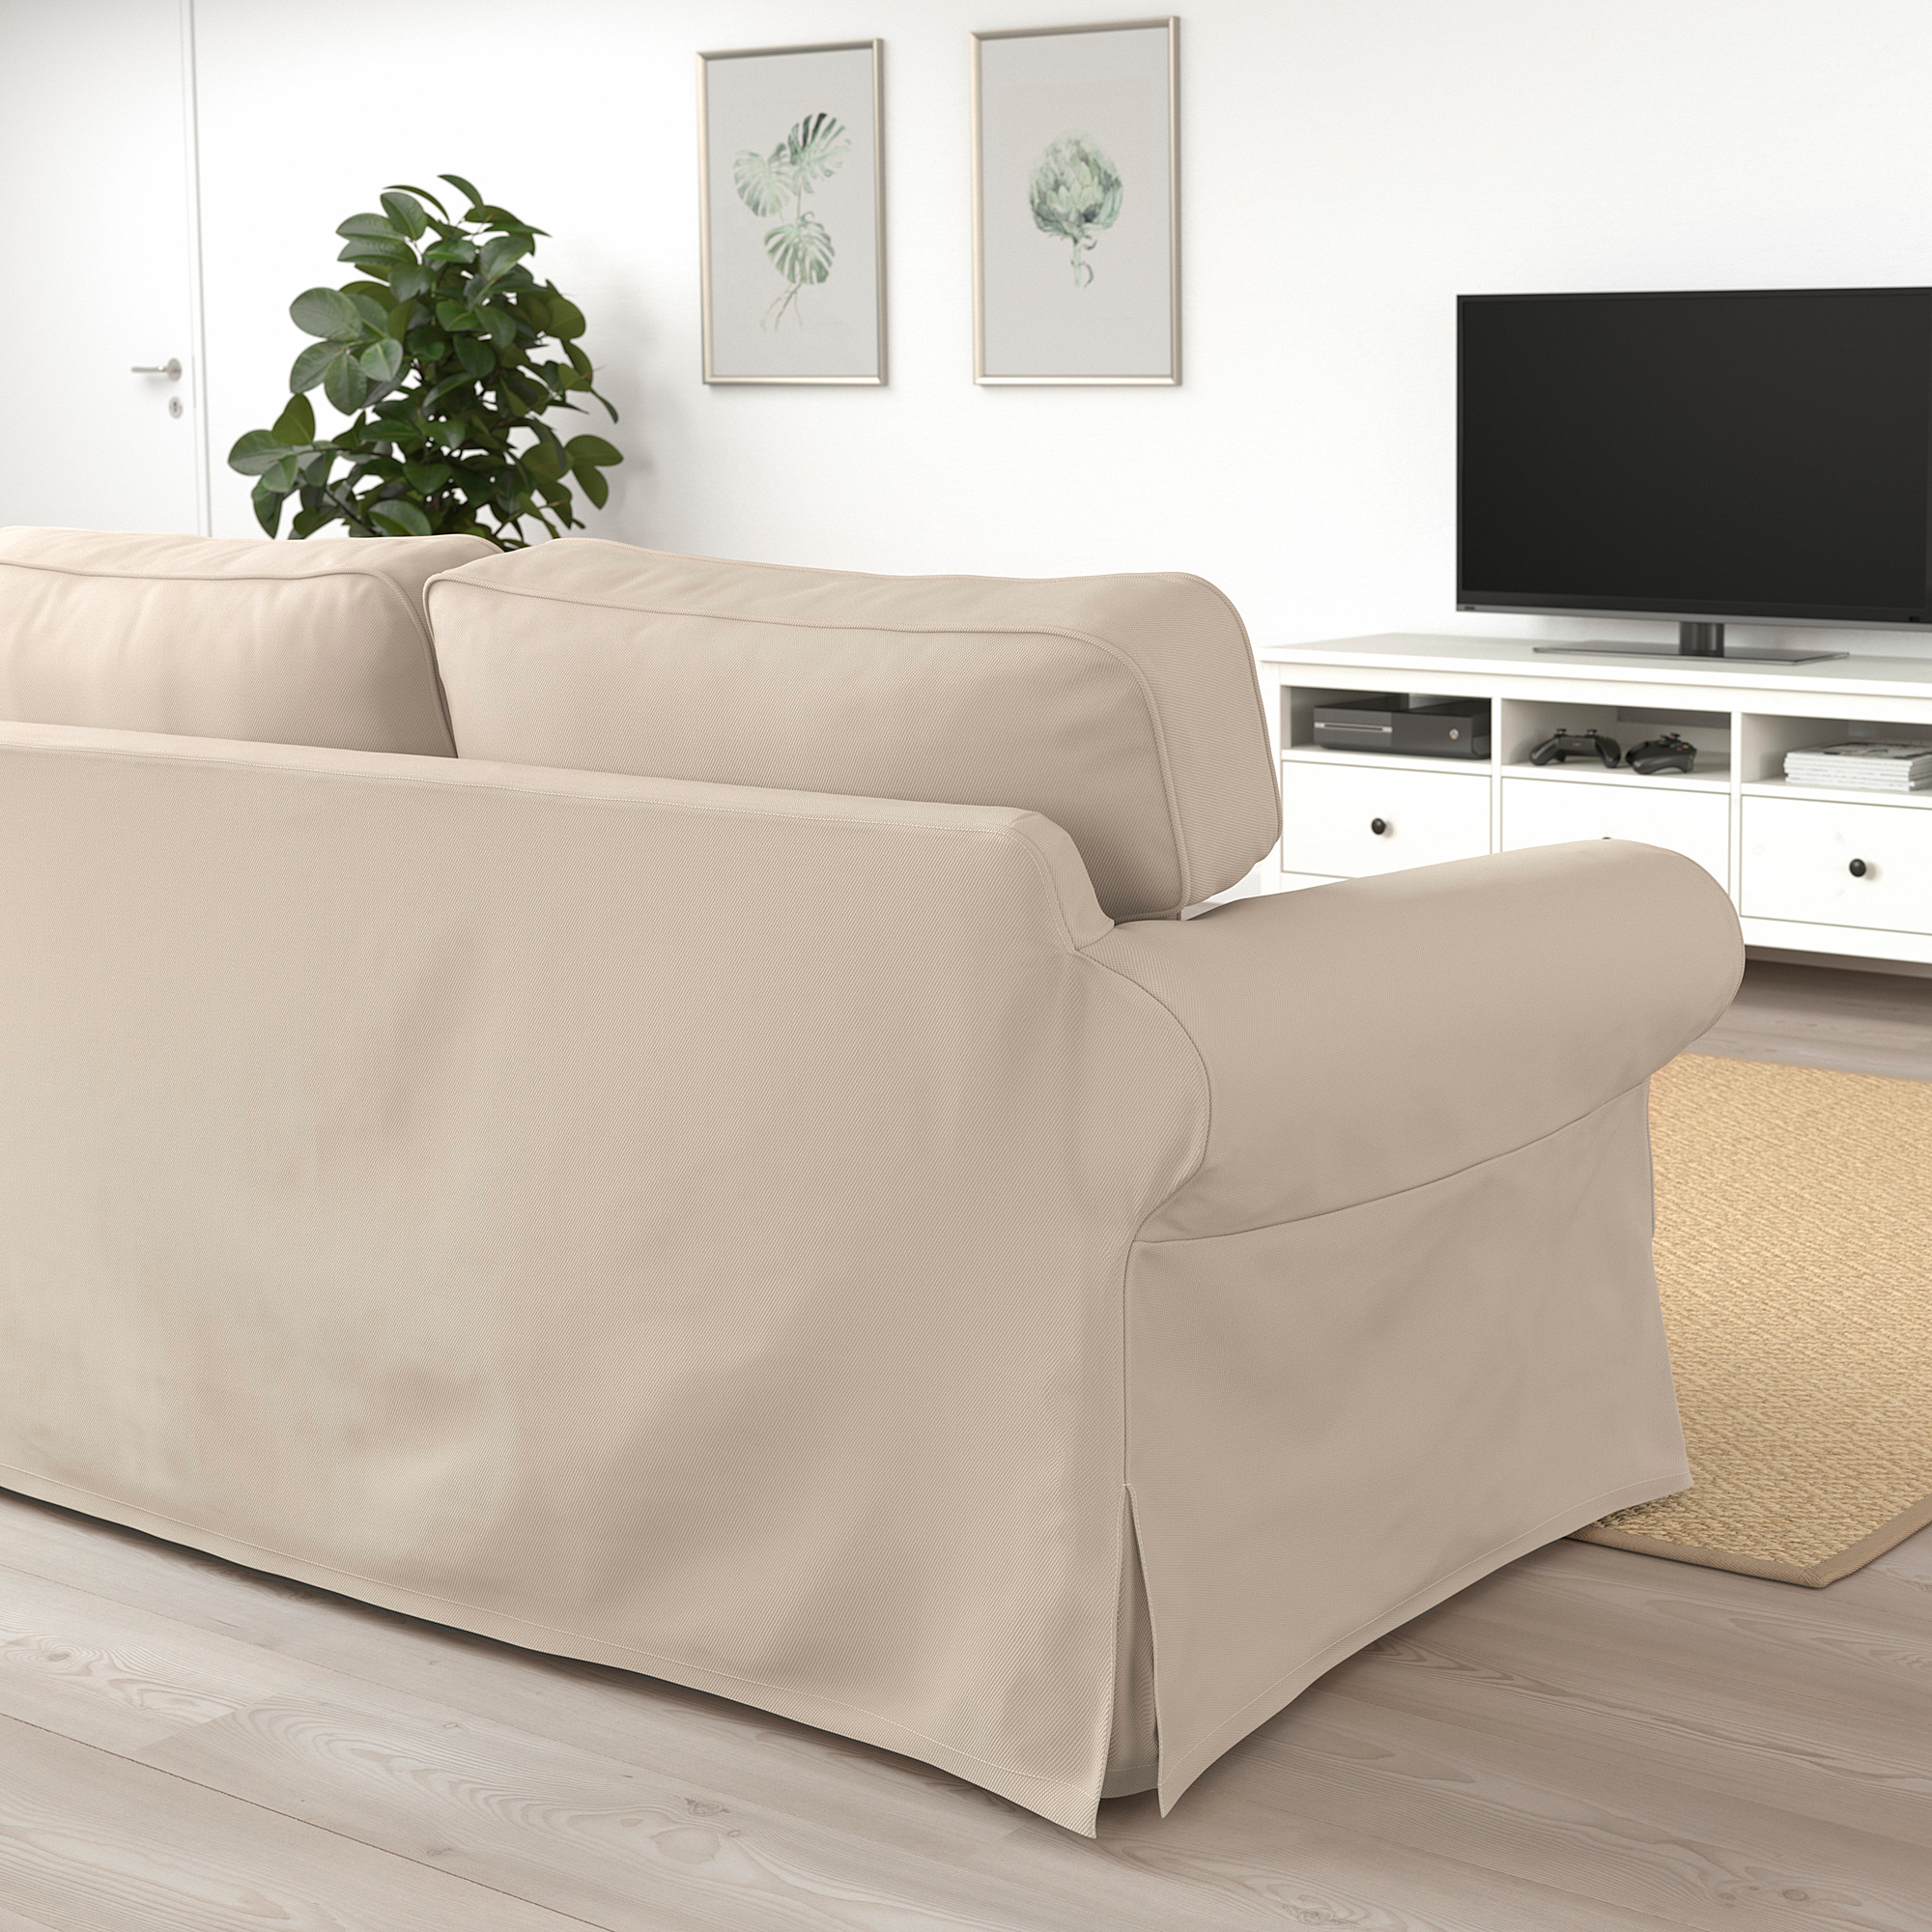 Jonge dame Ja merknaam EKTORP - 3-seat sofa, Hallarp beige | IKEA Hong Kong and Macau